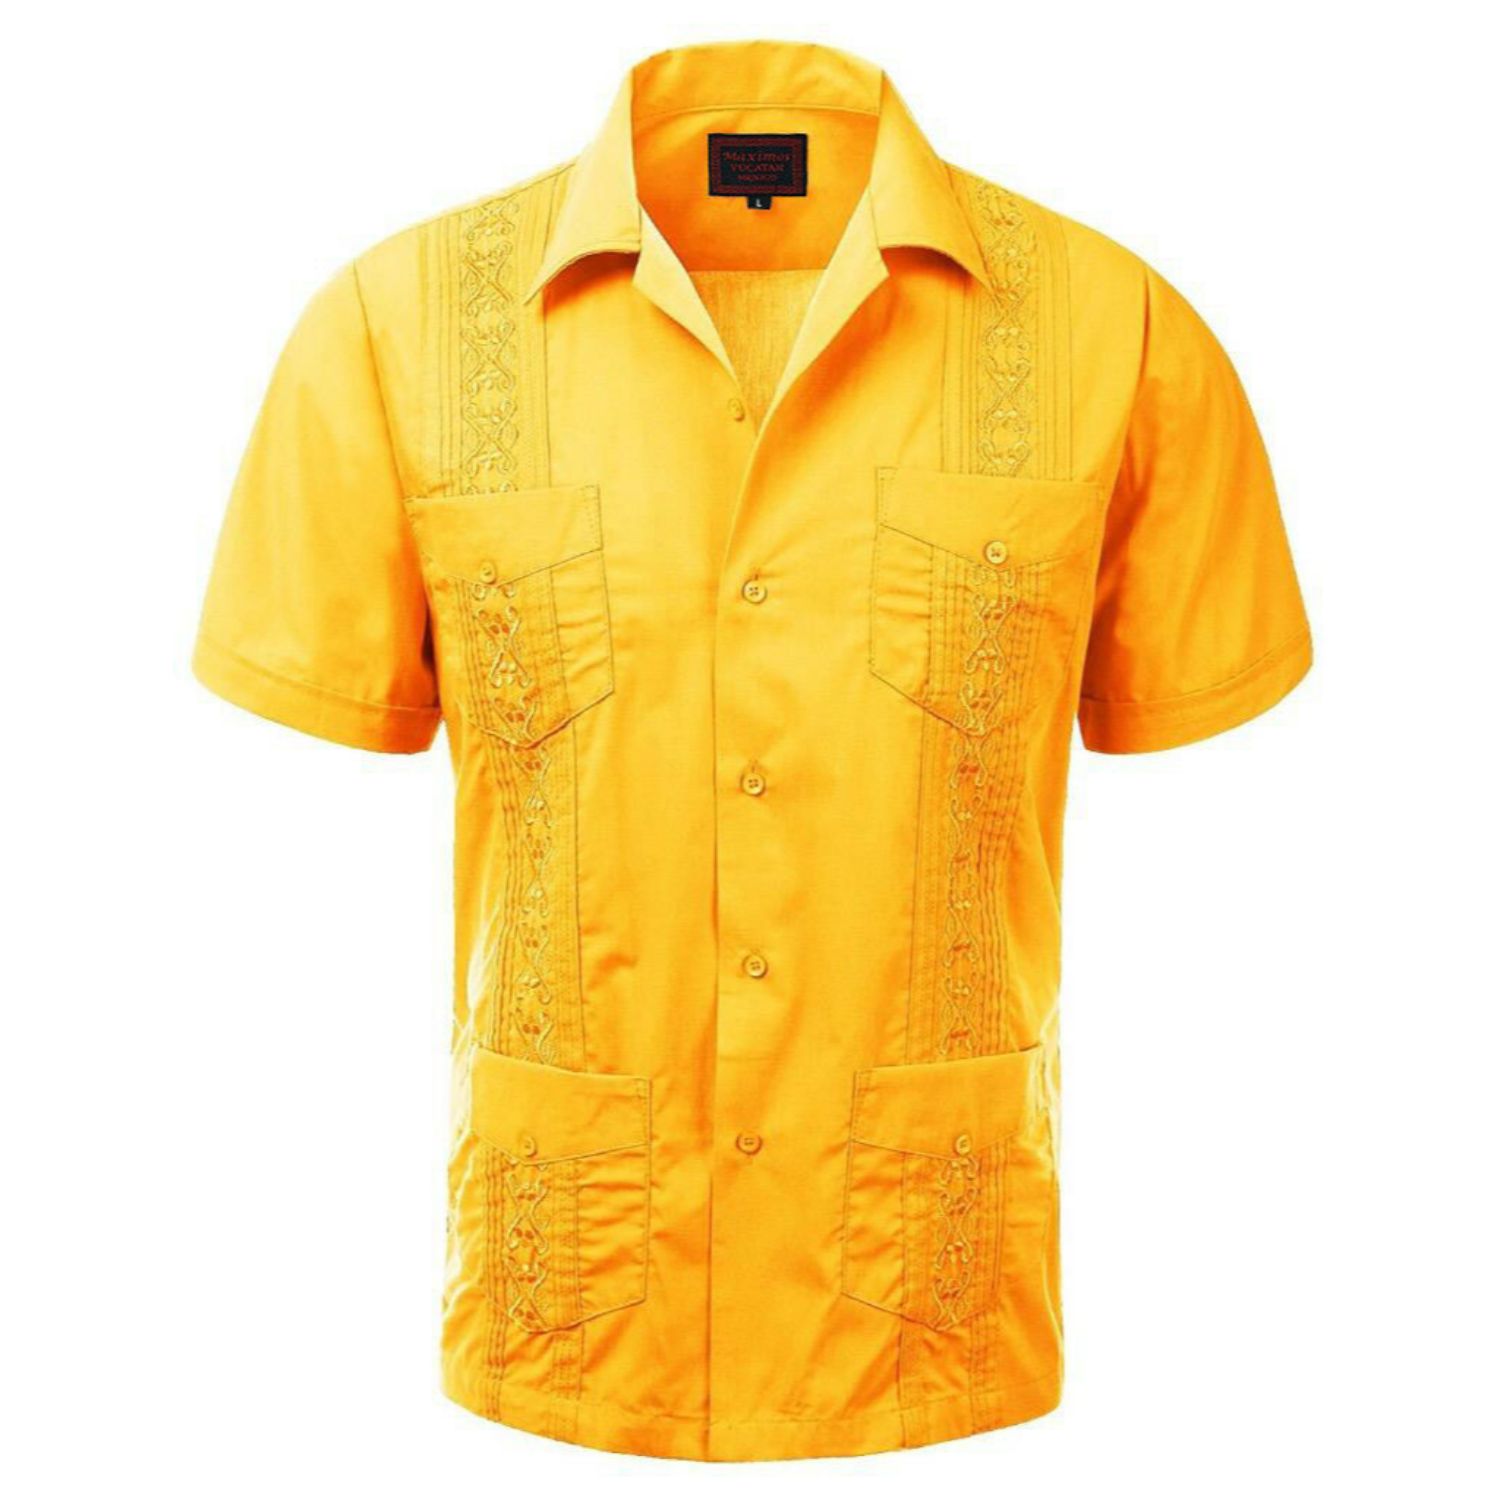 Maximos Men's Guayabera Summer Casual Cuban Beach Wedding Vacation Short Sleeve Button-Up Casual Dress Shirt Yellow 3XL - image 1 of 1